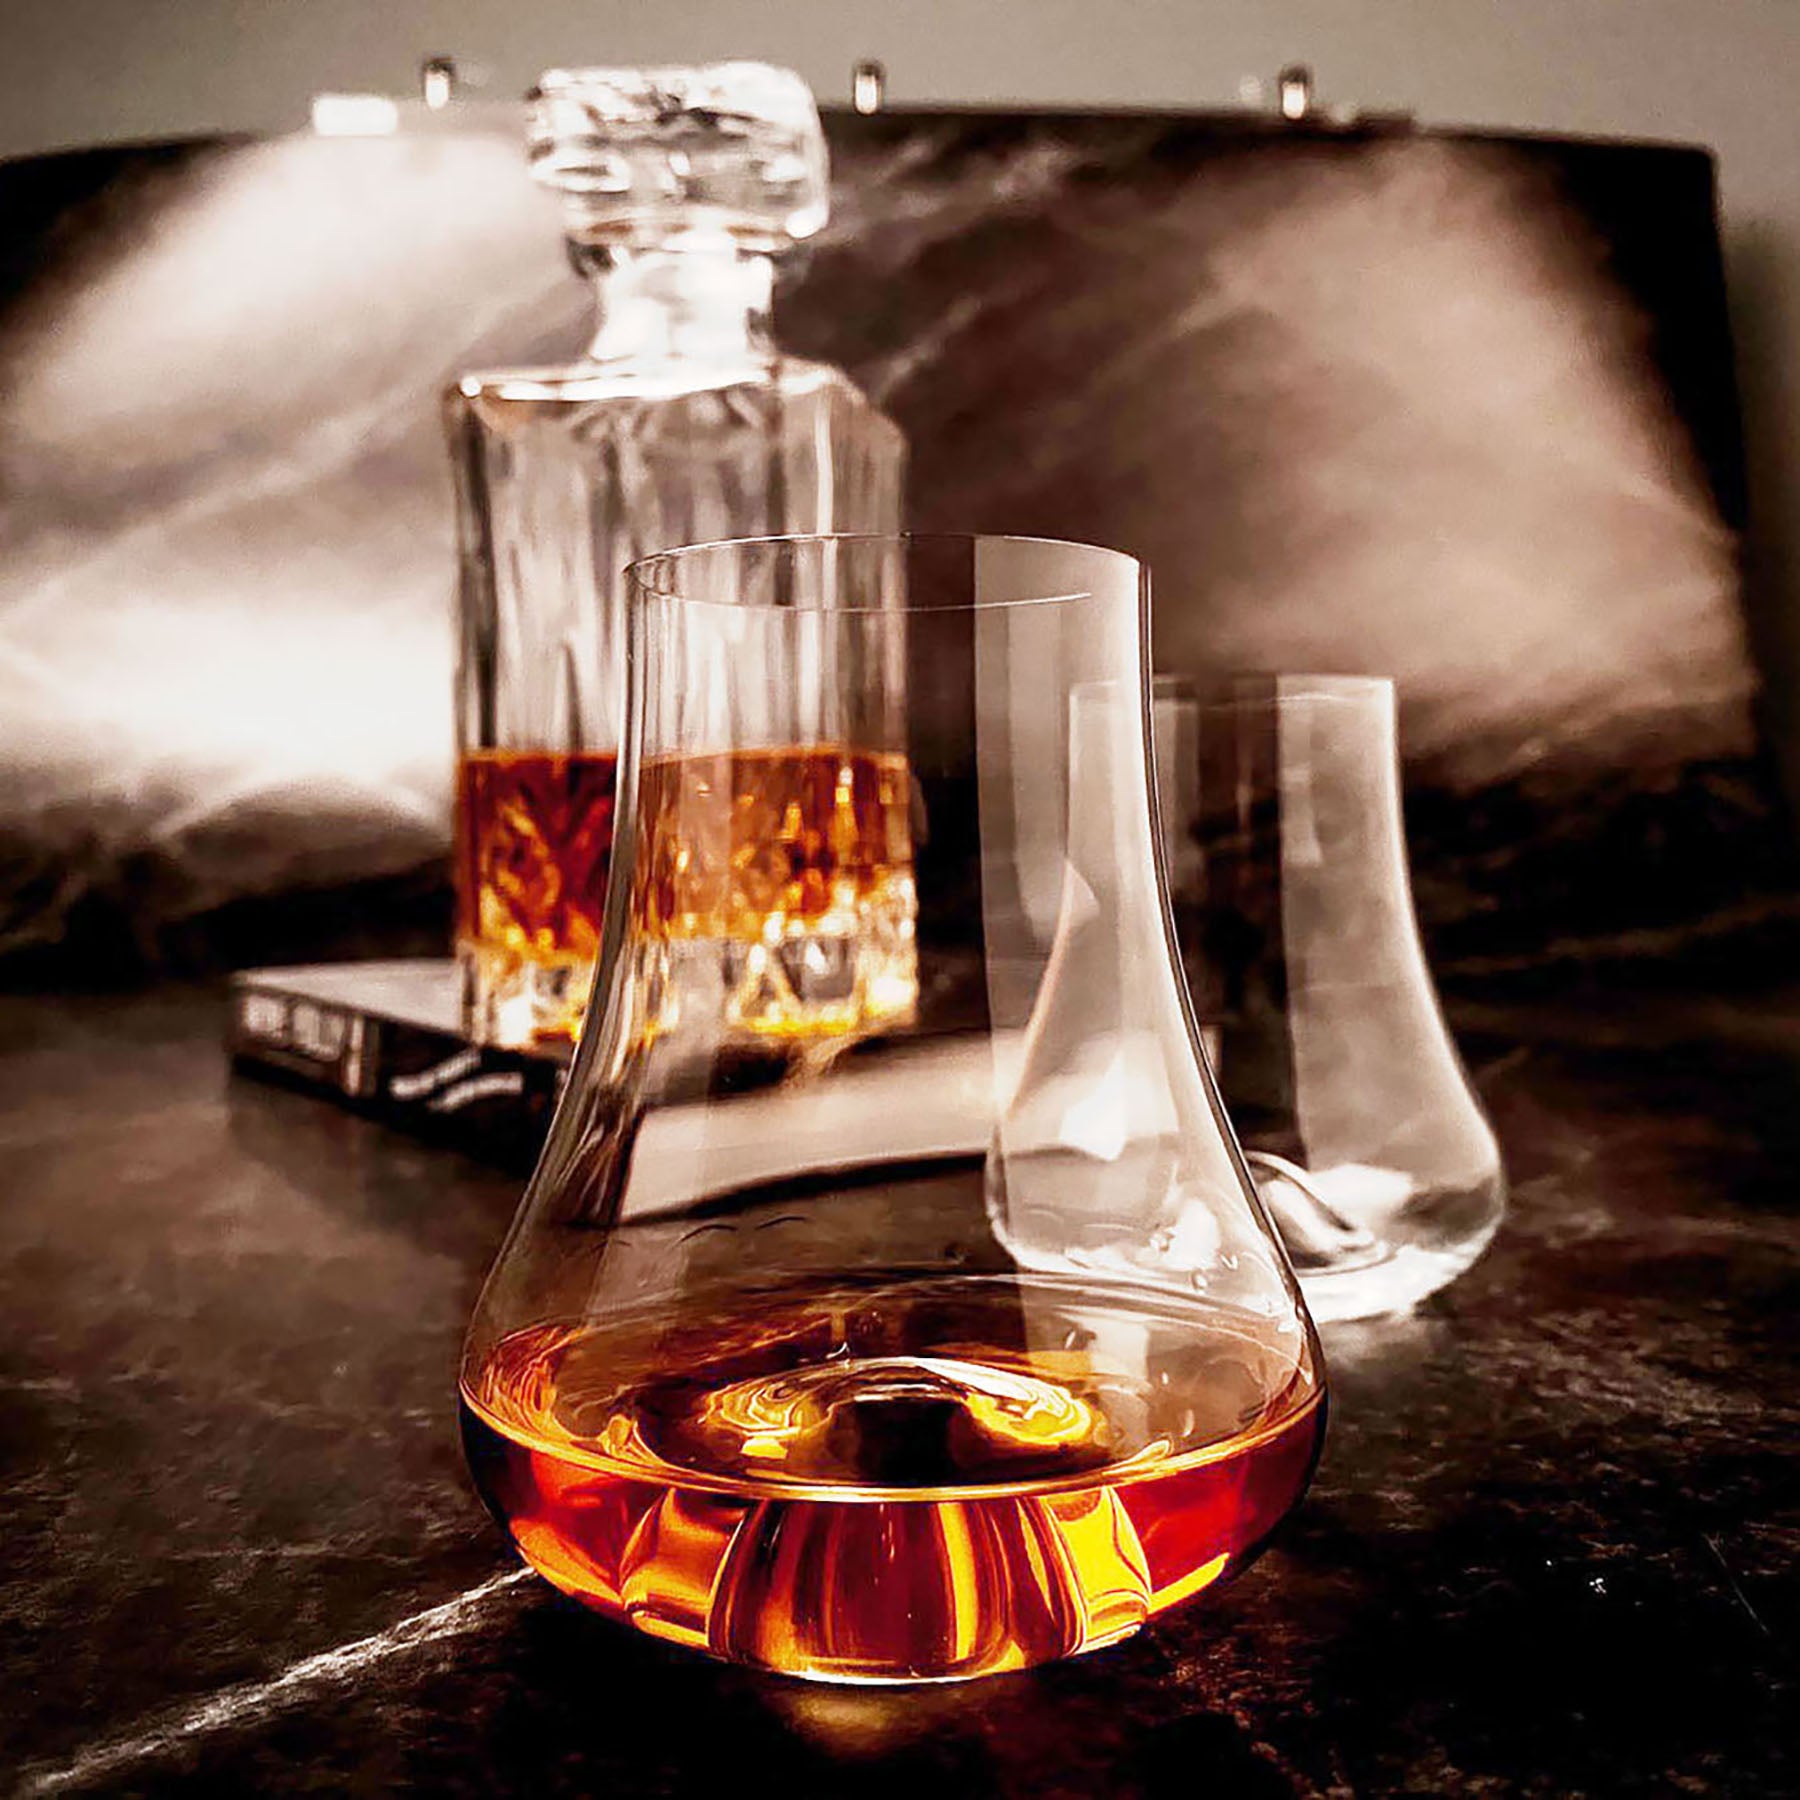 Alchemi Whiskey Tasting Glass 20,7cl, 2-pack